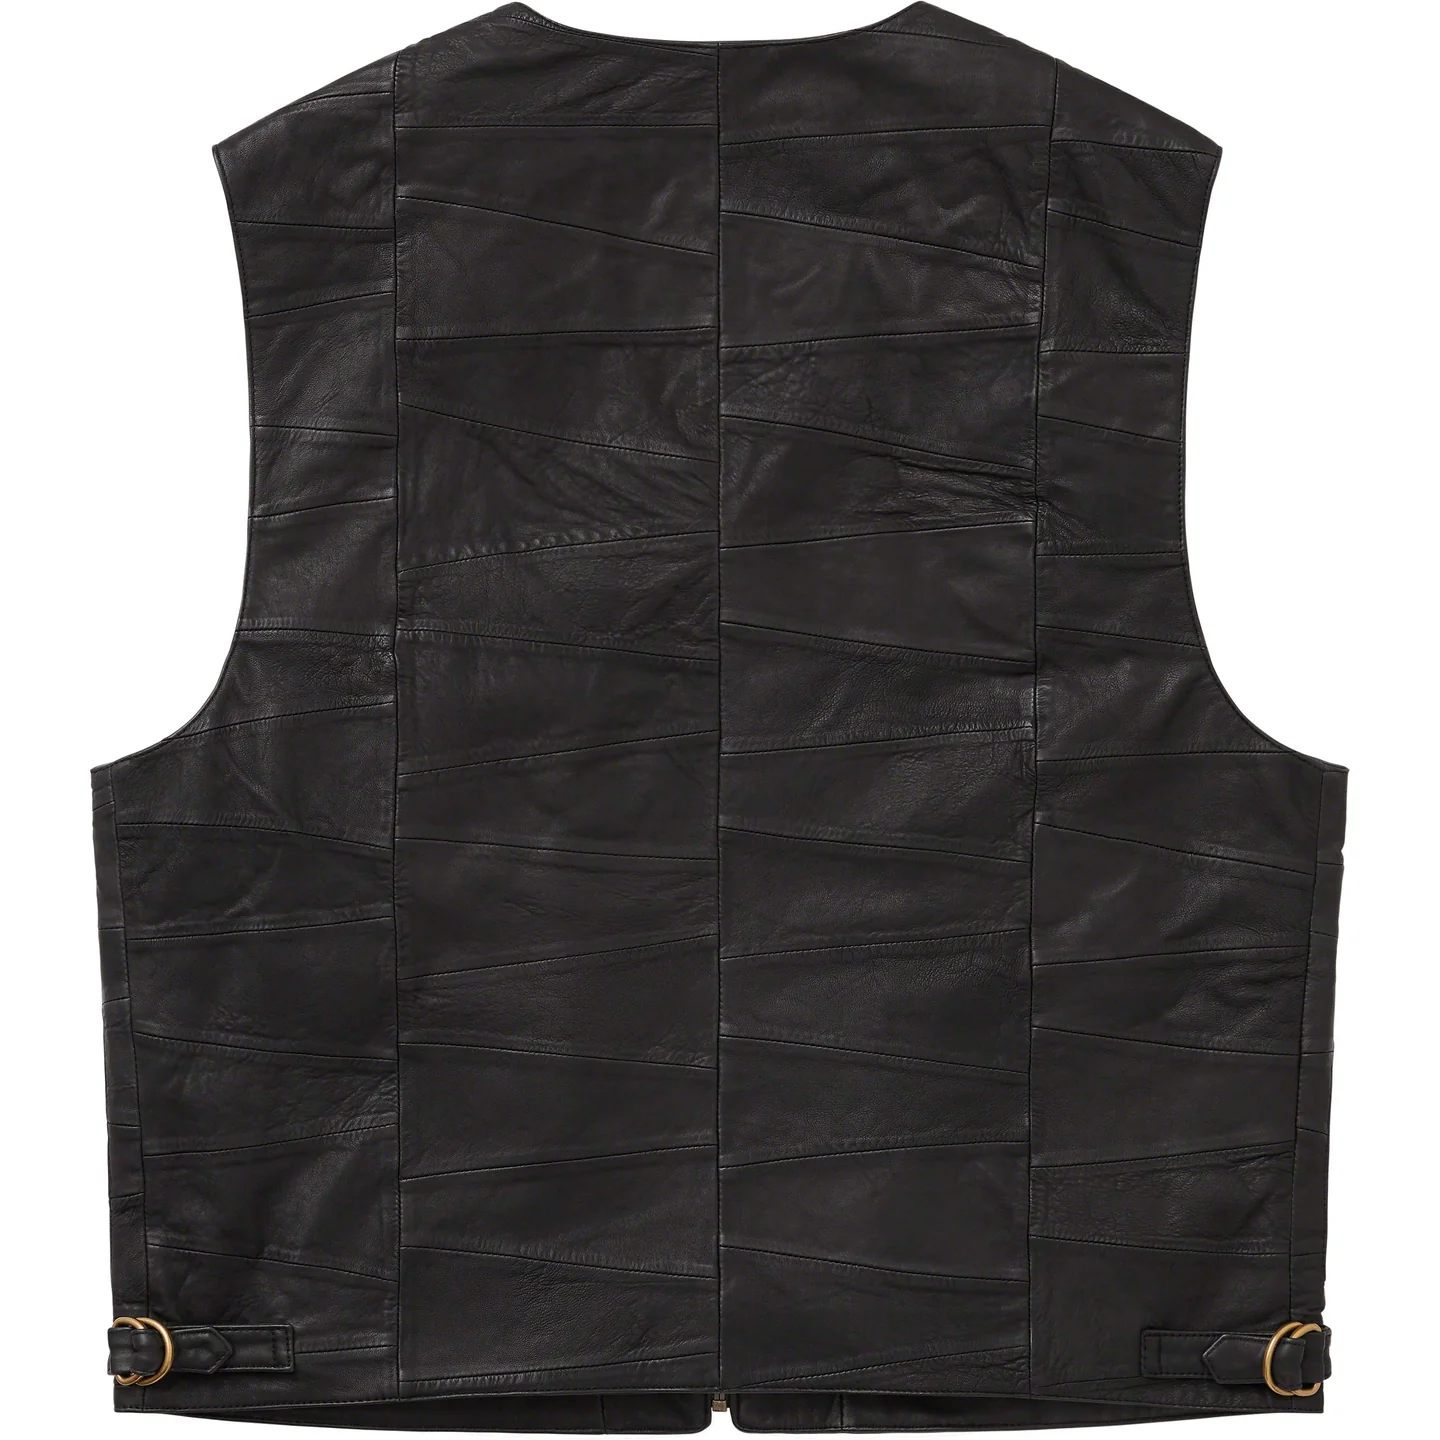 Supreme Patchwork Leather Cargo Vest